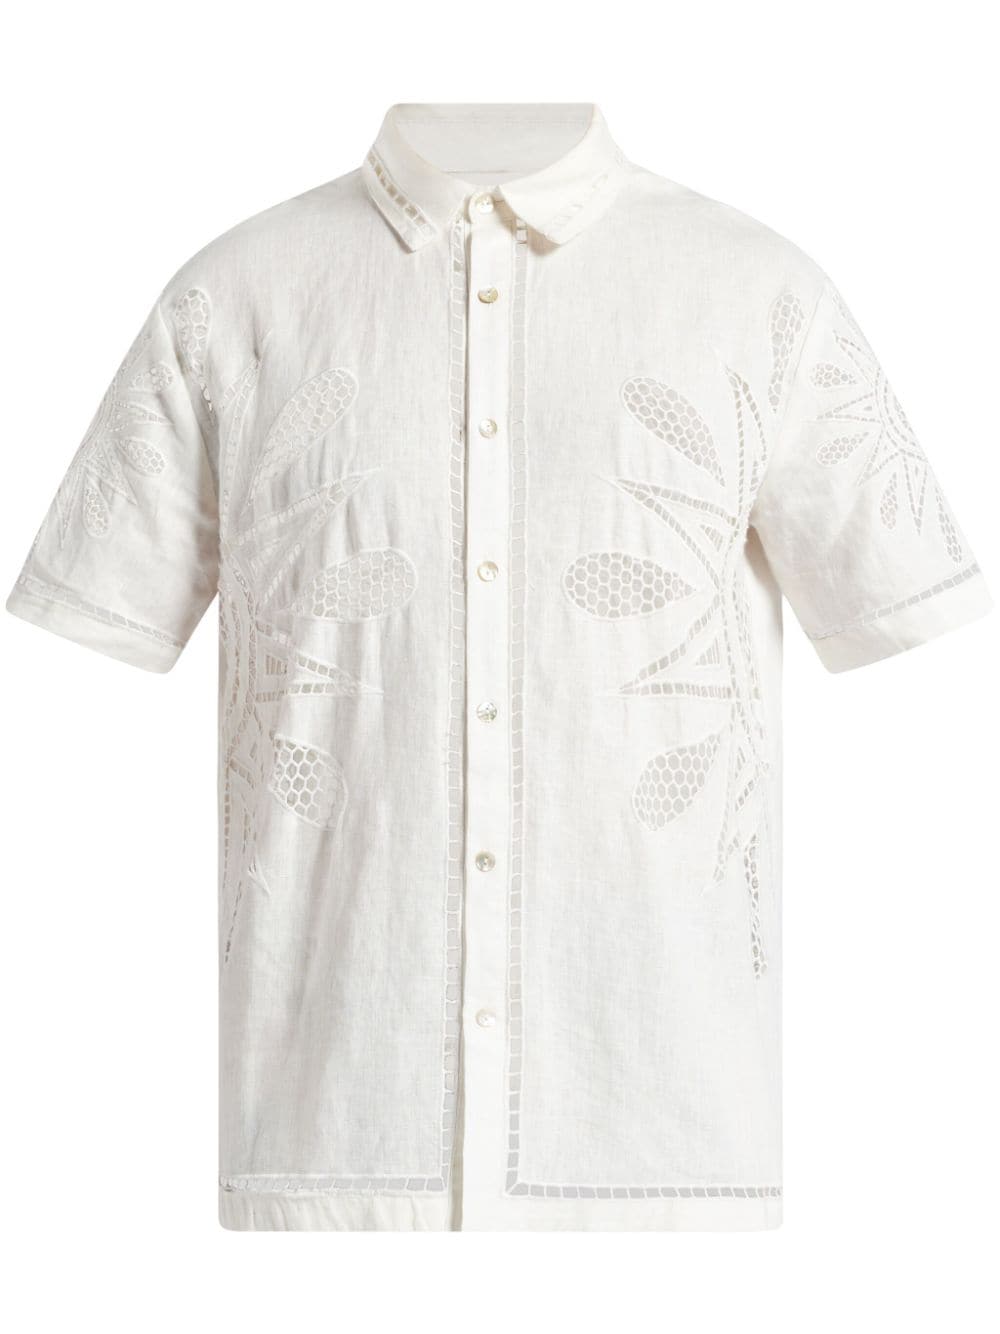 FARM Rio lace-panelling linen shirt - White von FARM Rio